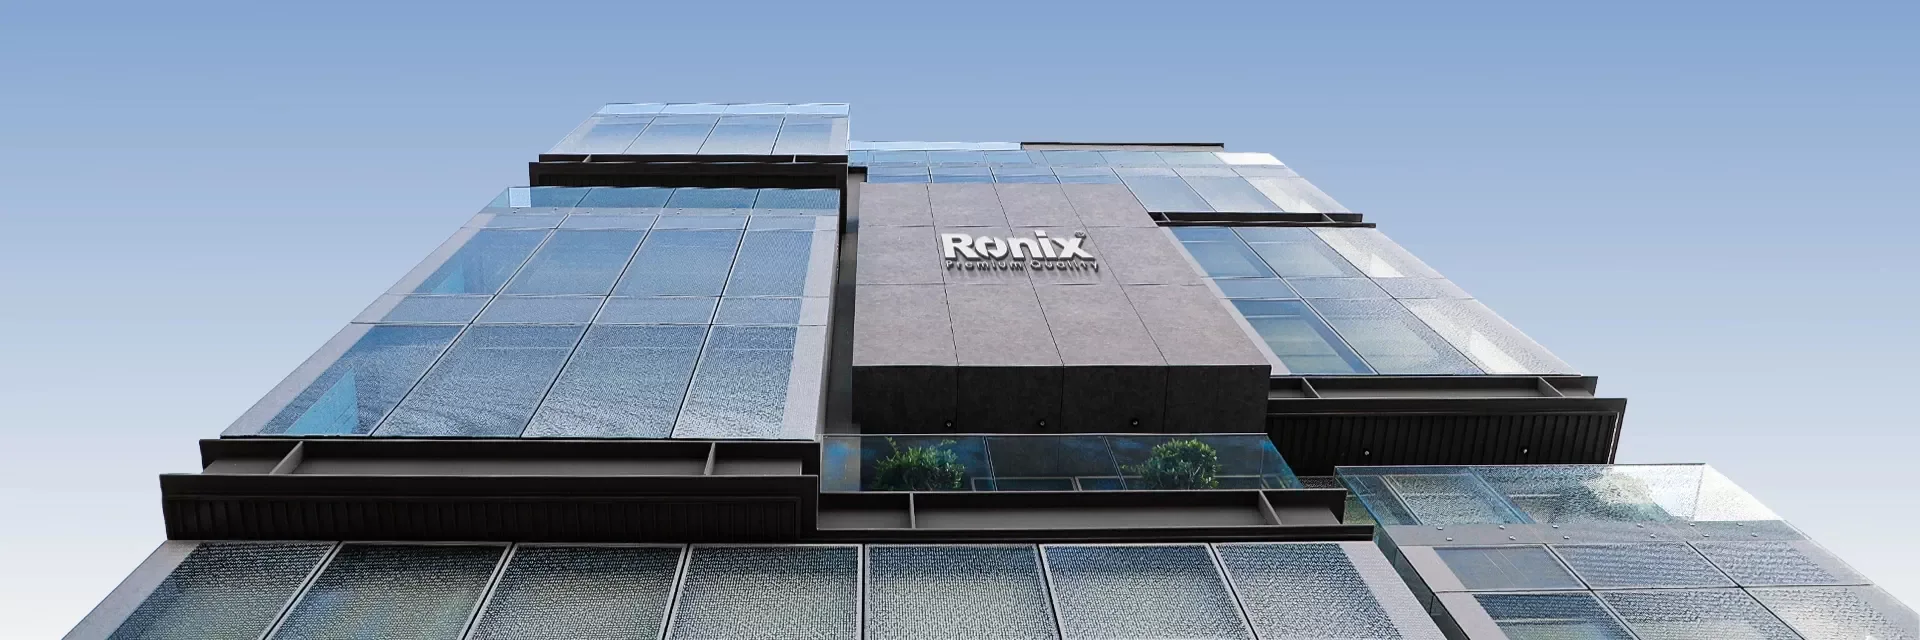 Ronix building 